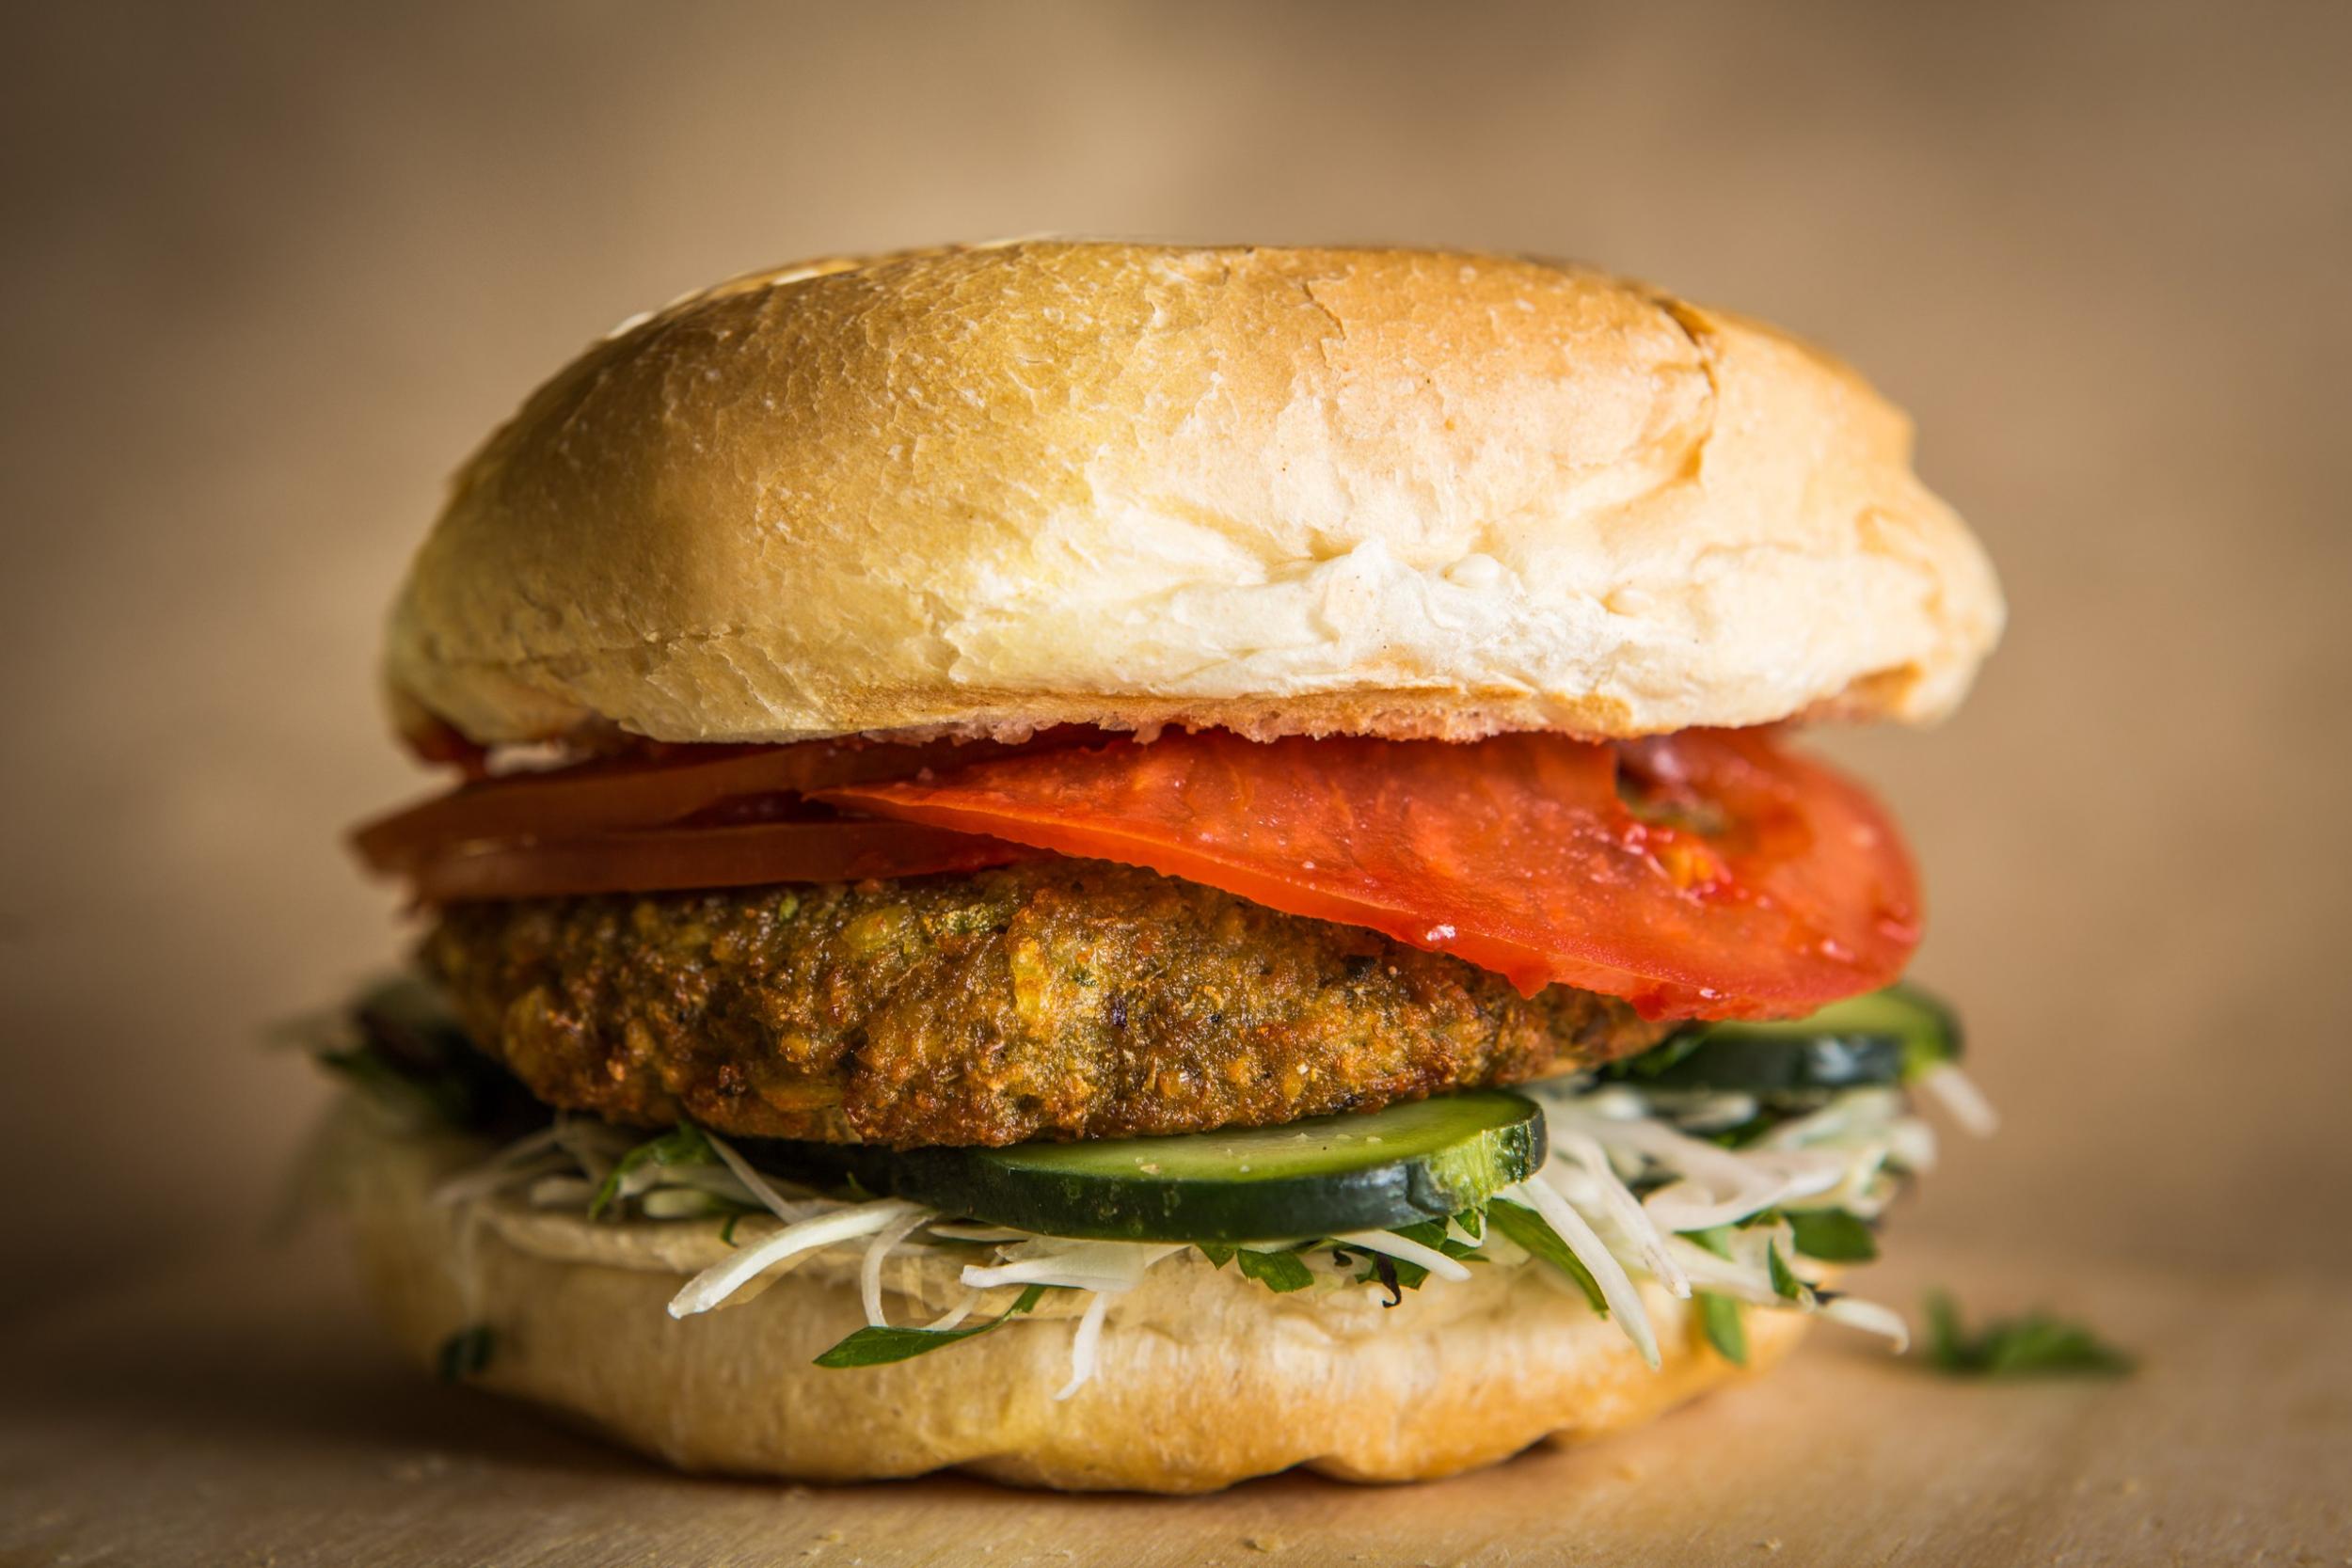 Vega Burger offers up tasty vegan and veggie fare